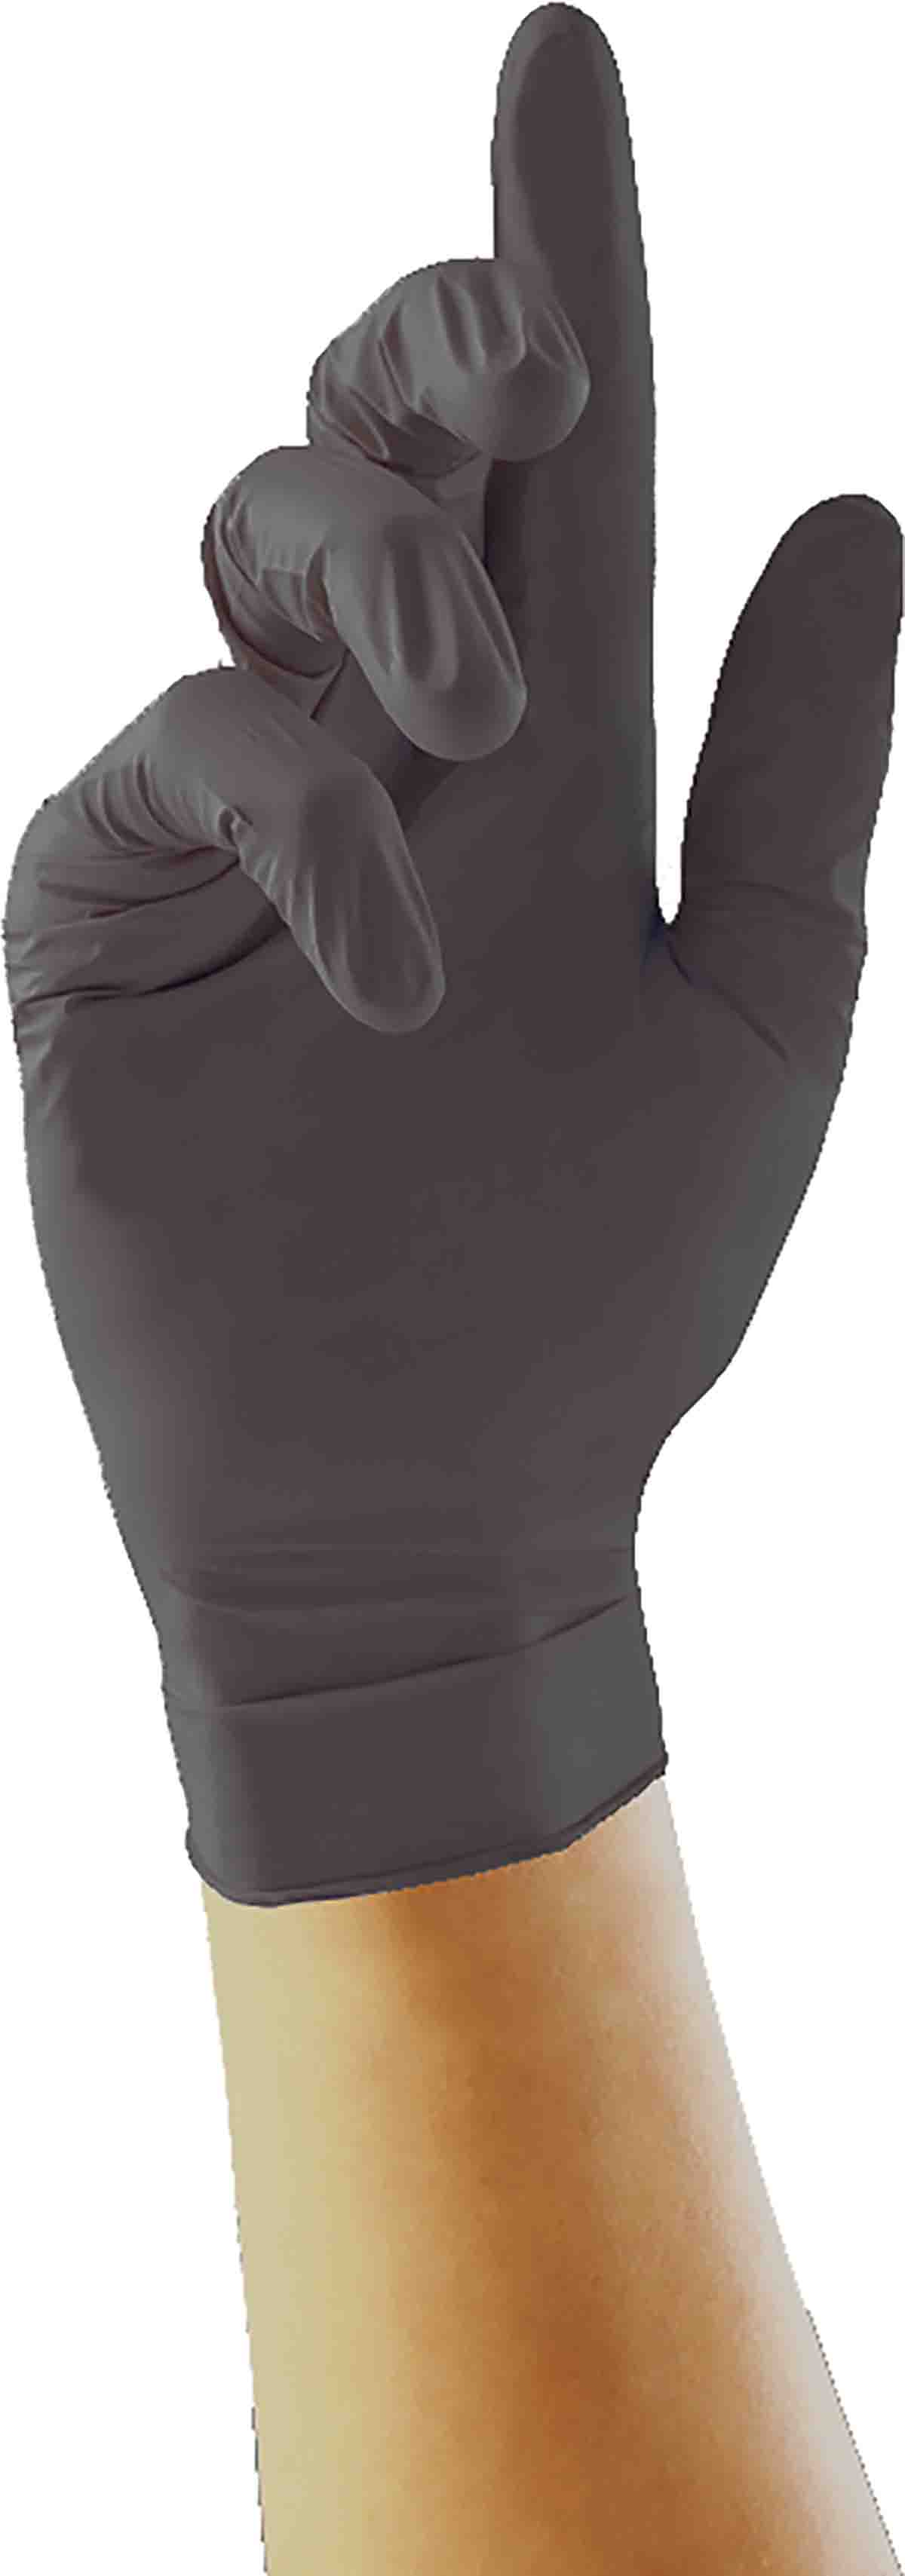 Uniglove Black Powder-Free Nitrile Gloves, Size 6, Extra Small, 100 per Pack